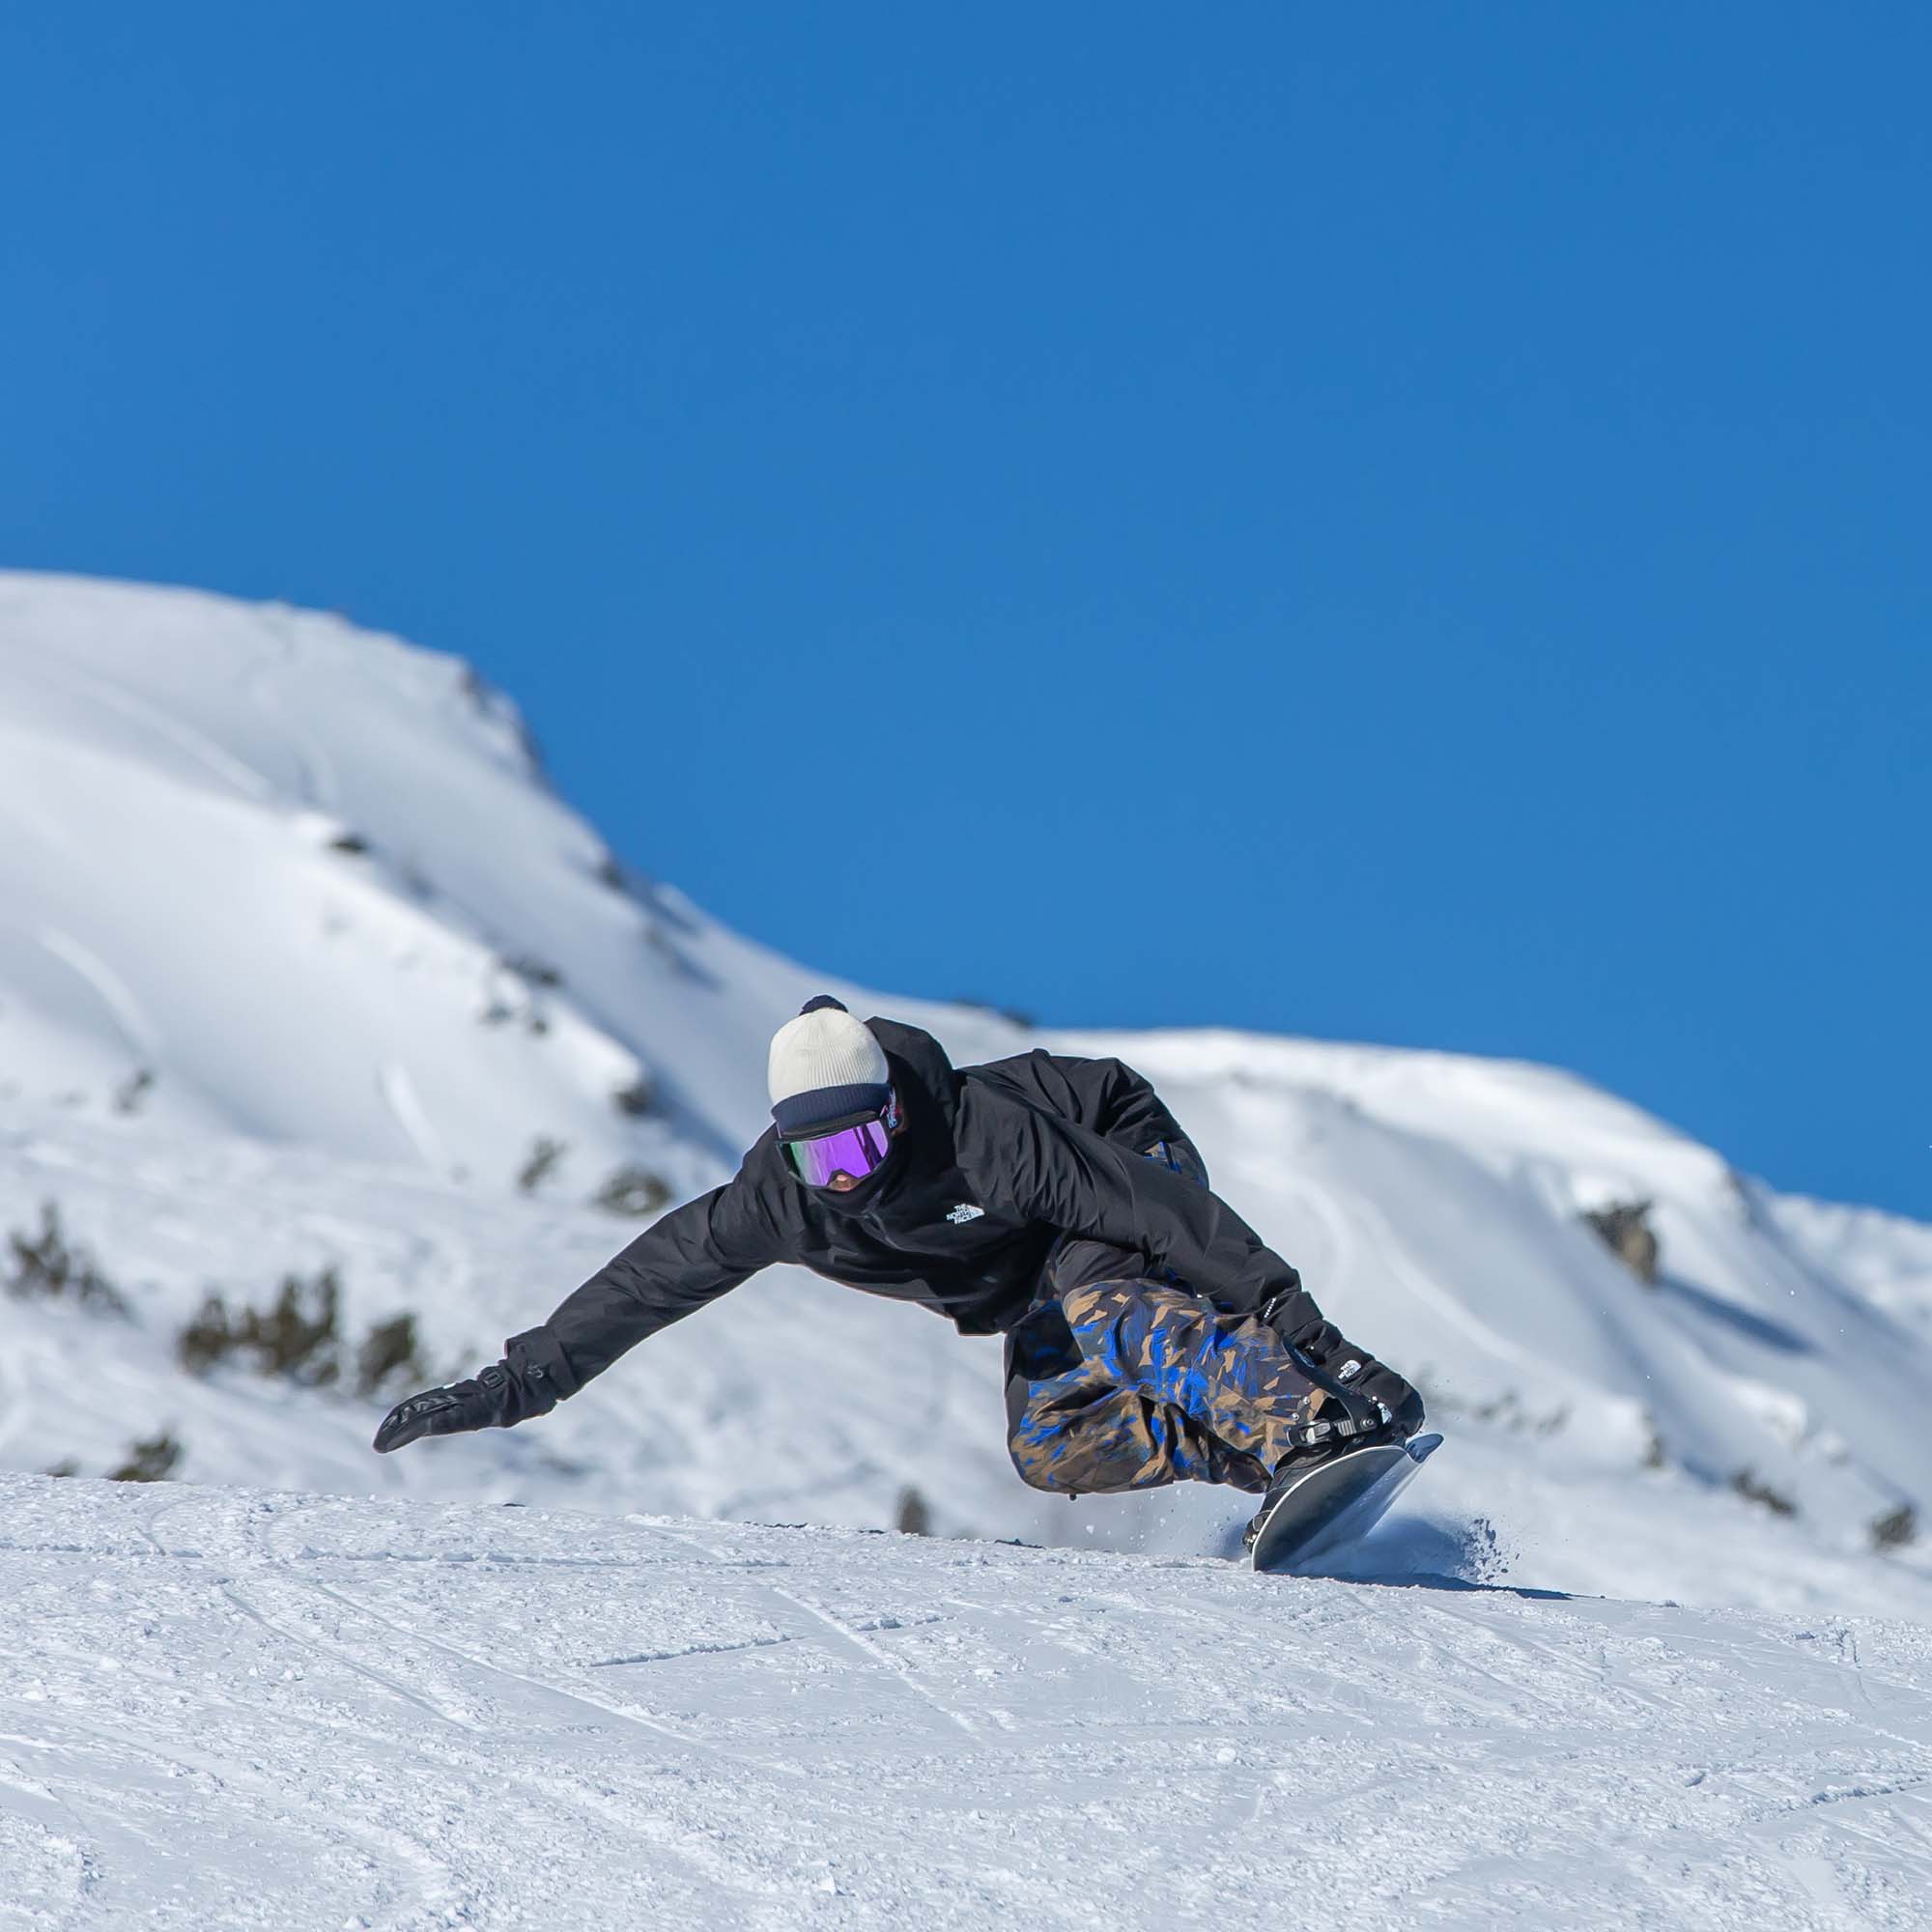 Bataleon Cruiser + All Mountain/Freeride Snowboard